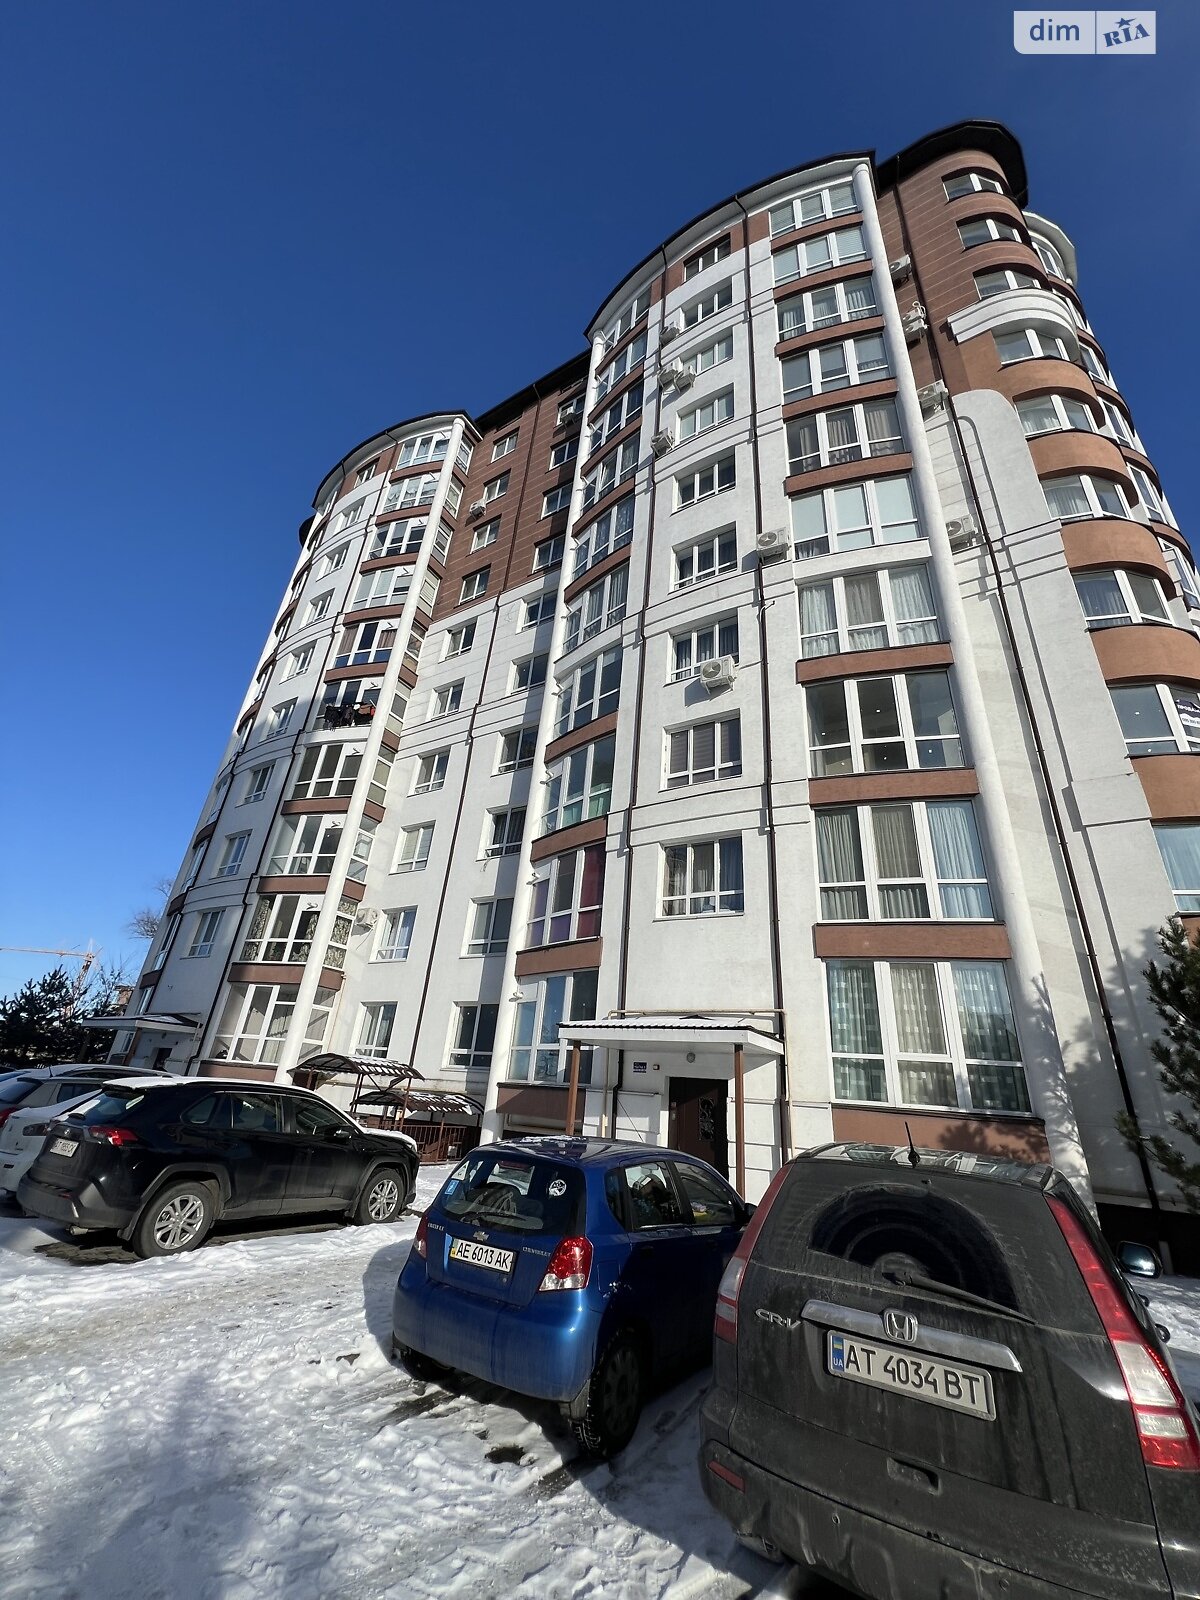 Продажа трехкомнатной квартиры в Ивано-Франковске, на ул. Дворская 32, район Калинова Слобода фото 1